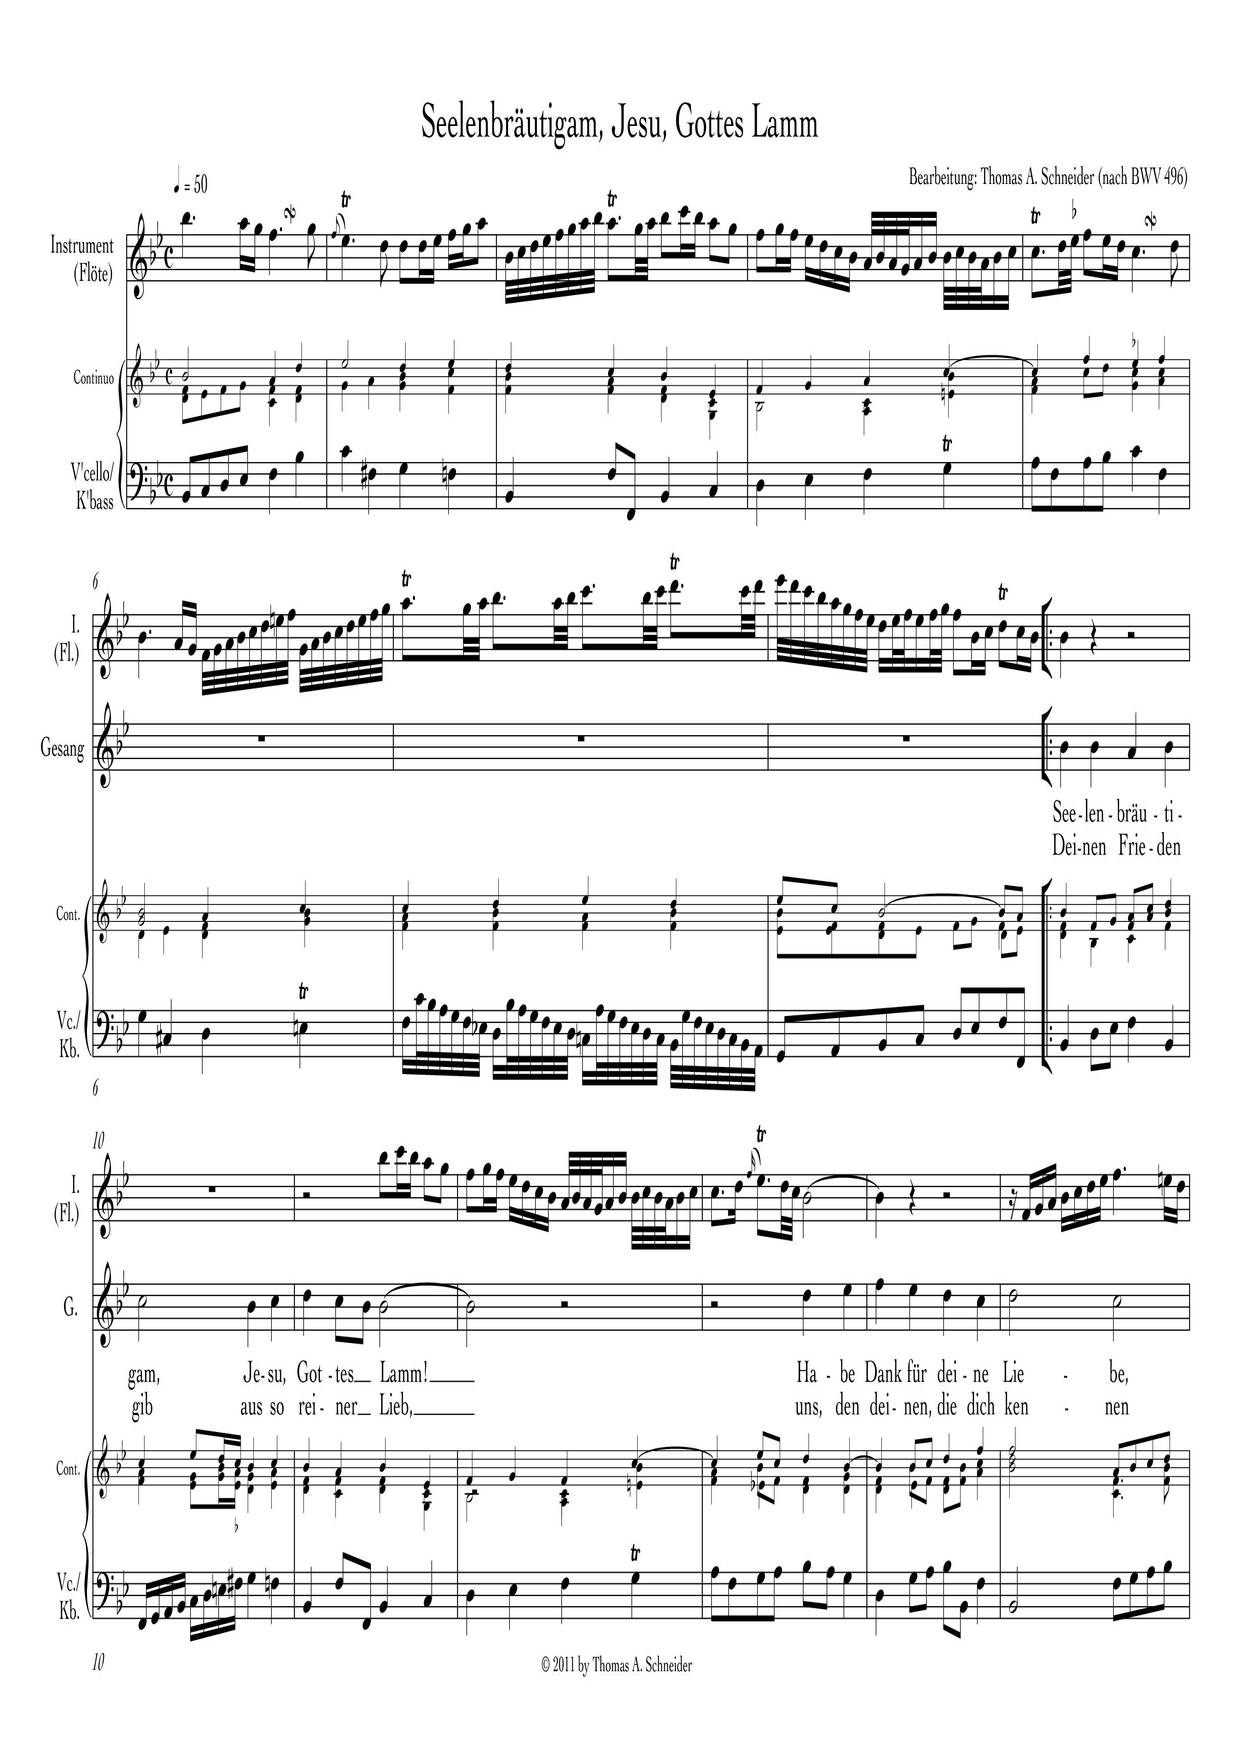 Seelen-Bräutigam, Jesu, Gottes Lamm, BWV 496琴譜